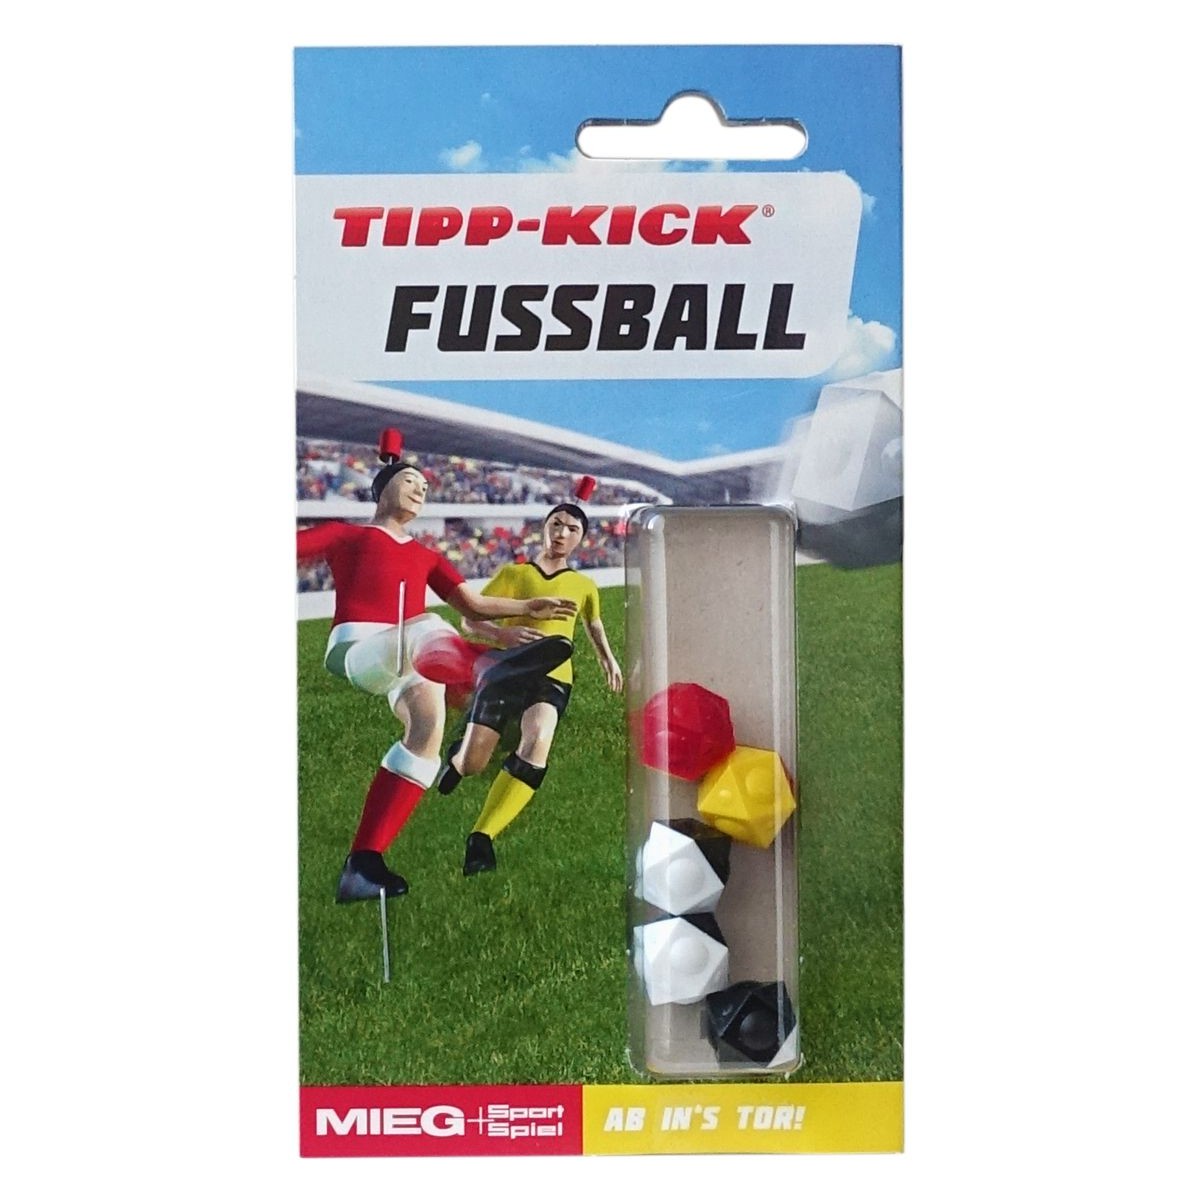 TIPP-KICK Set of 5 Balls for use with TIPP-KICK Soccer Game Sets